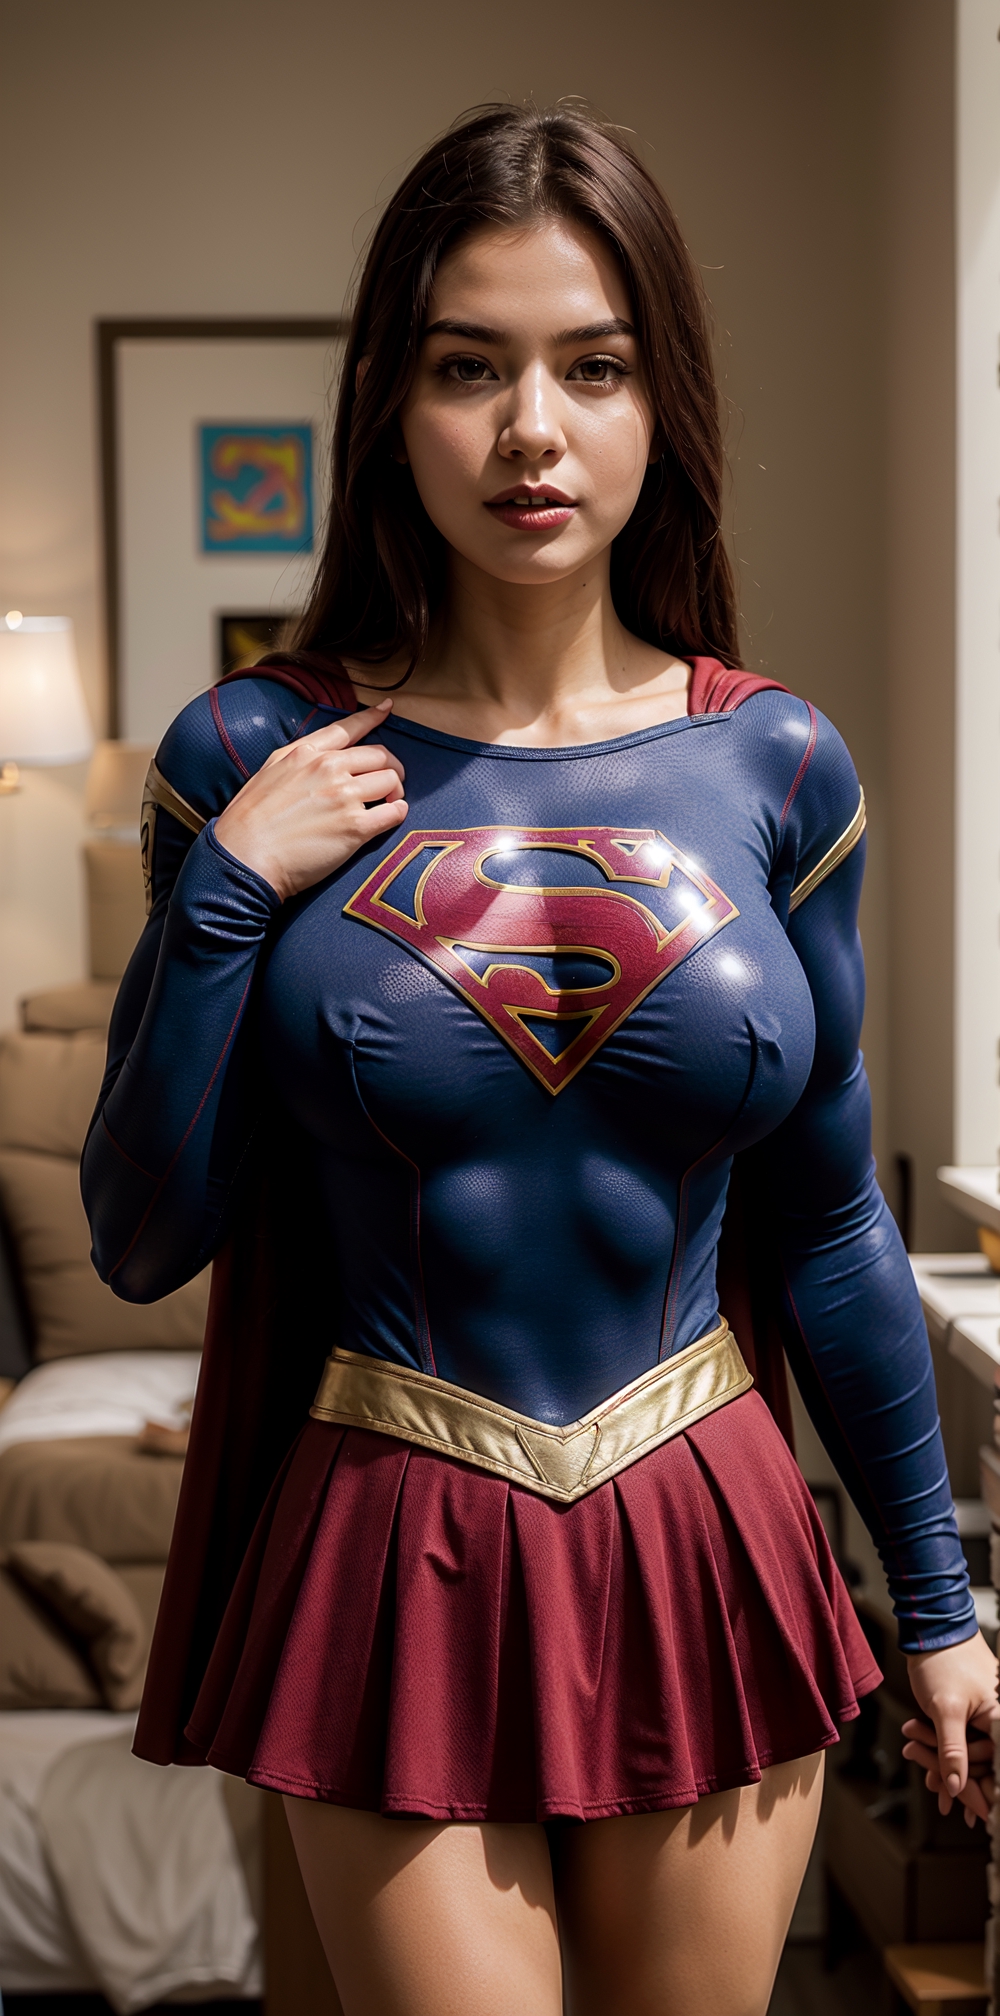 danielle zeltner add superhero big boobs photo